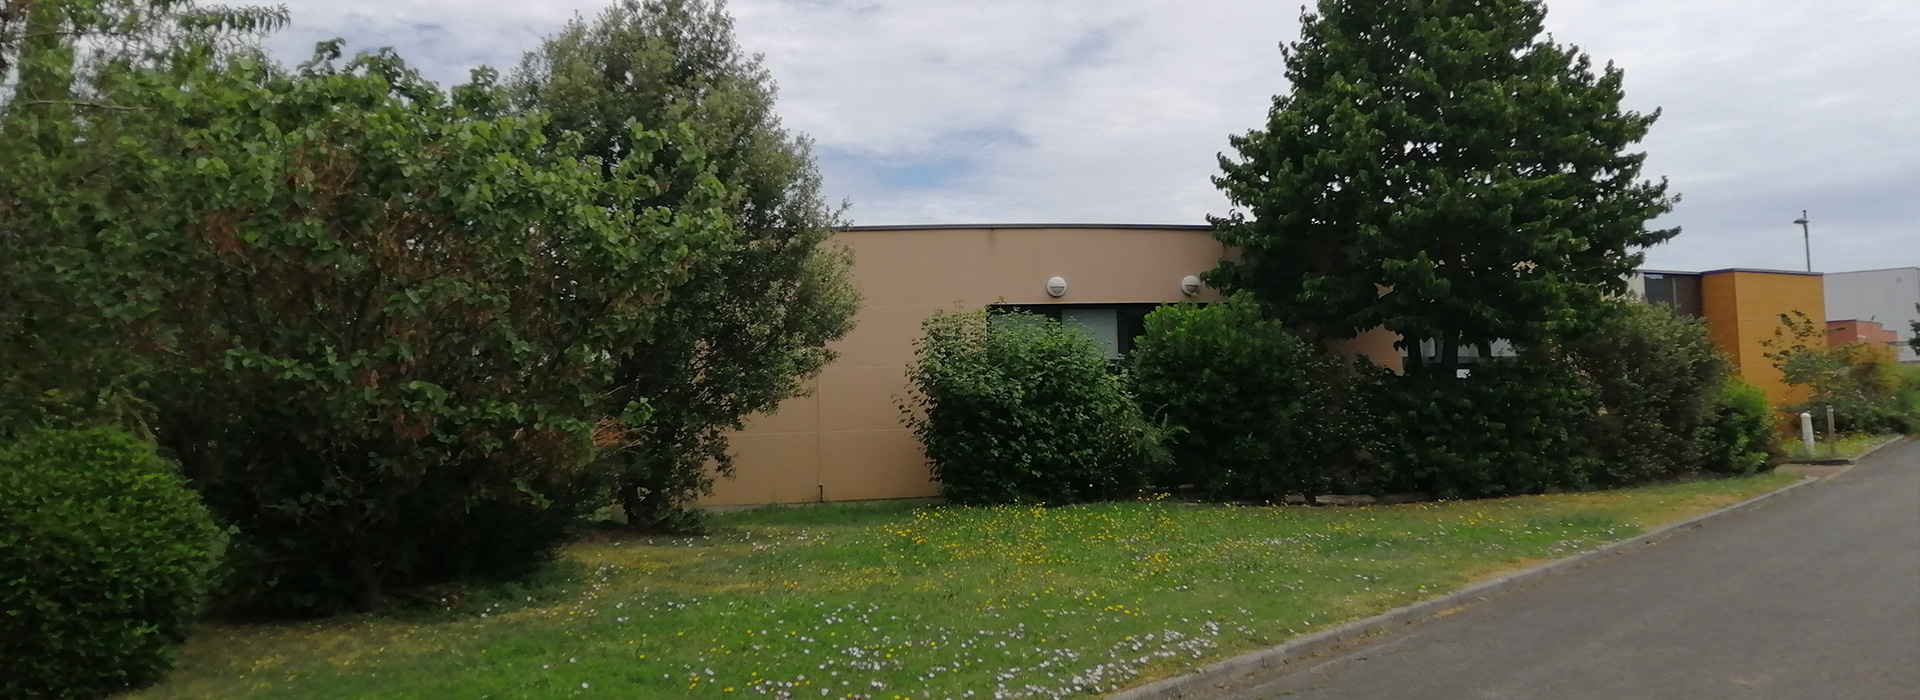 Ecole de sophrologie Caycédienne de Poitiers